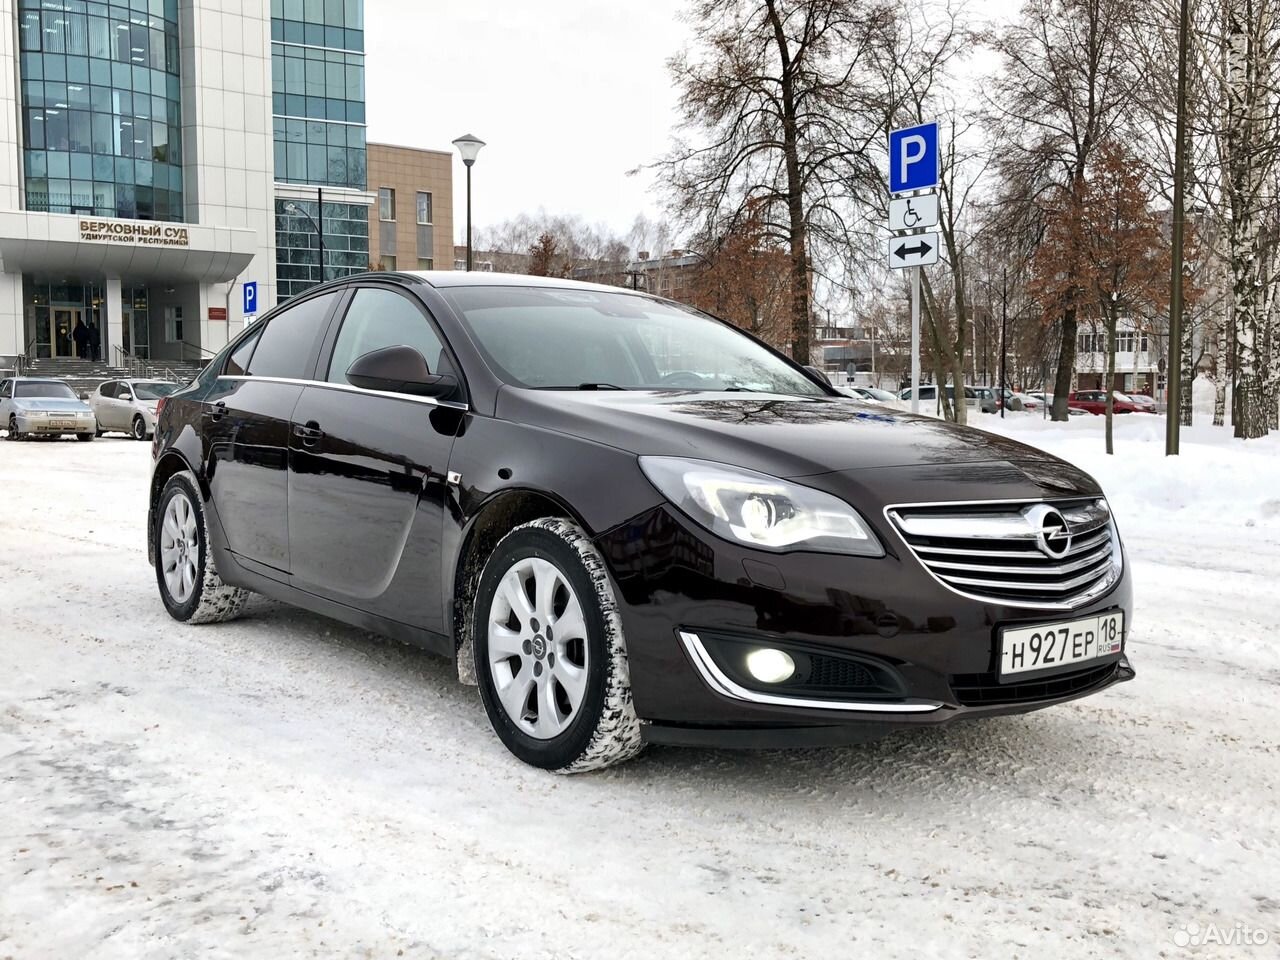 Opel Insignia 2014. Опель Инсигния 2014. Опель Инсигния турбо. Opel Insignia 2014 Black.